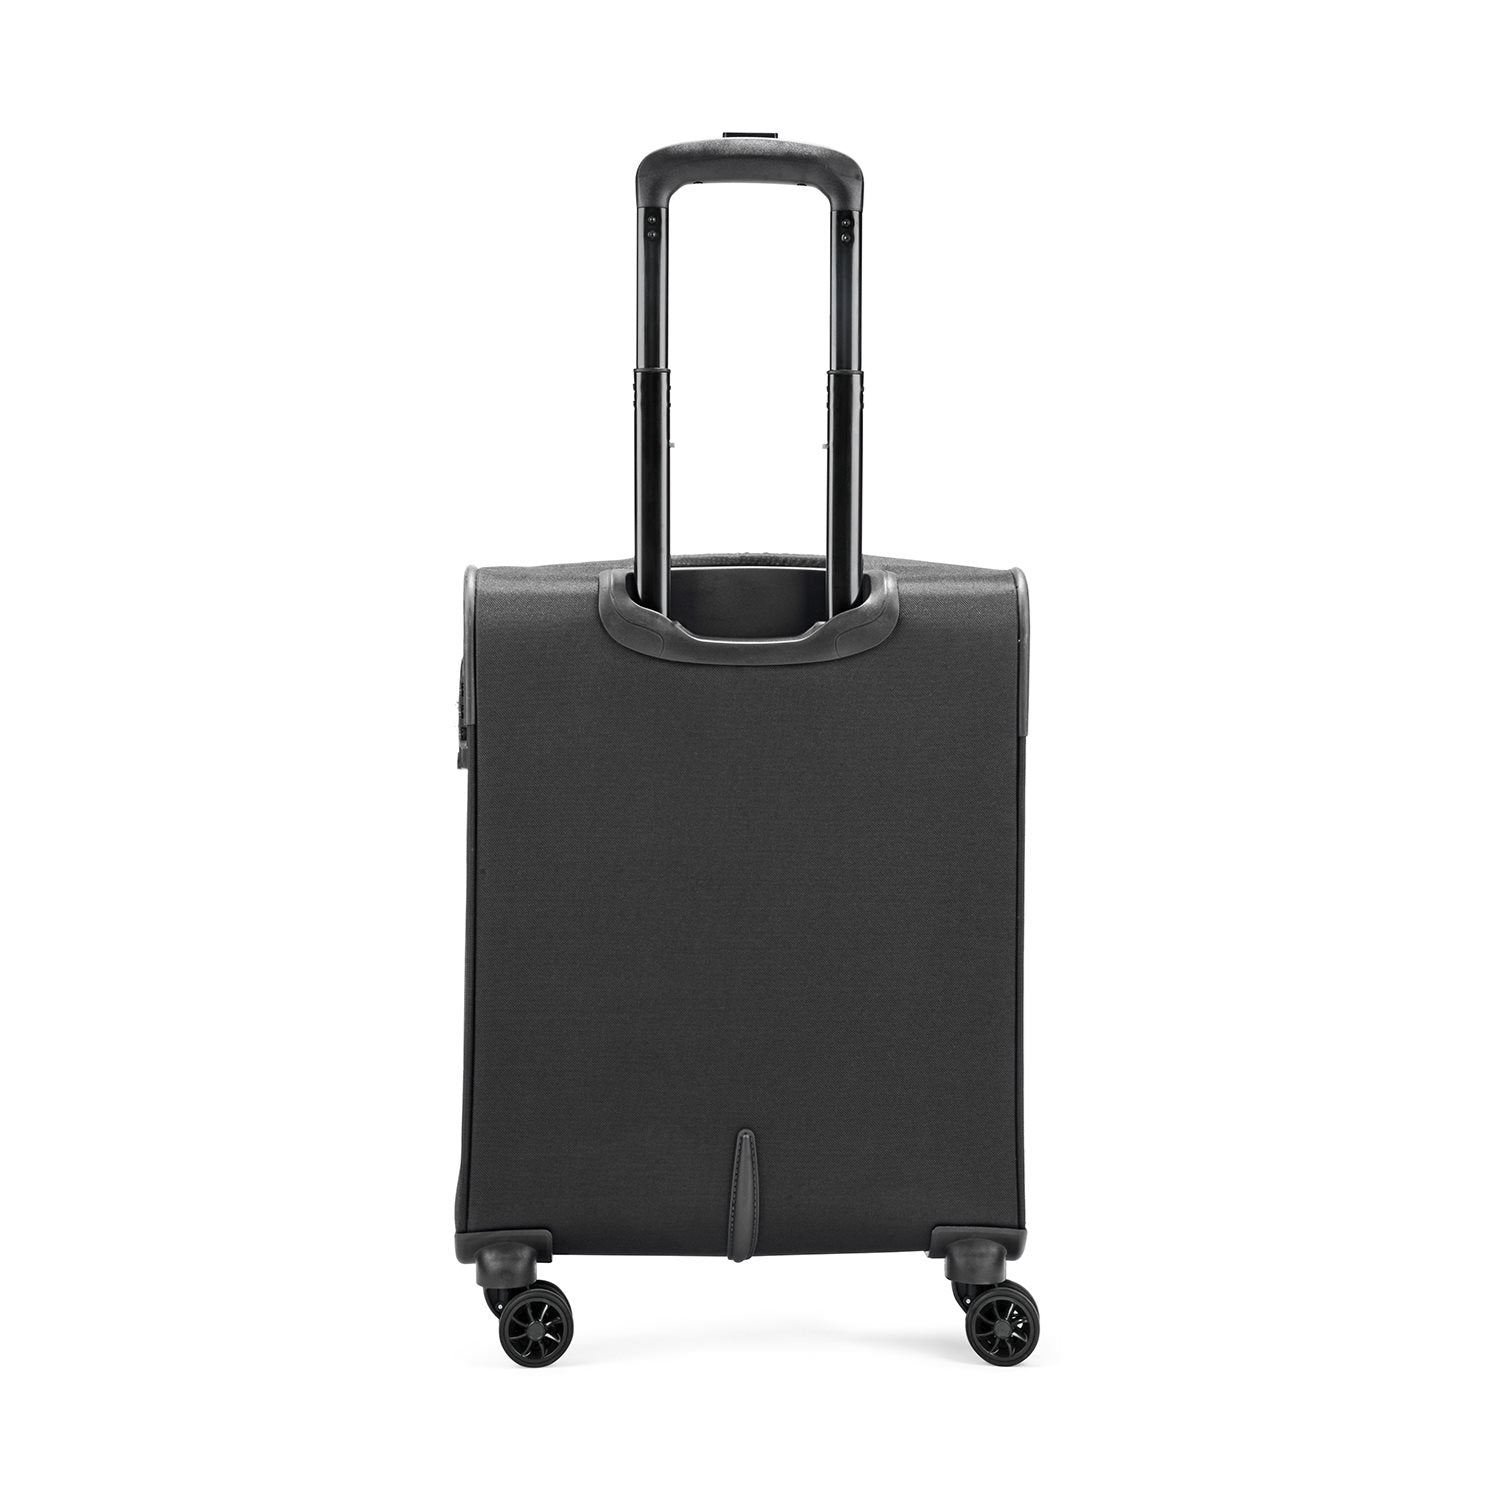 Carlton Newburry Plus - Handbagage Koffer - 55 cm - Black Handbagage Koffer - Reisartikelen-nl